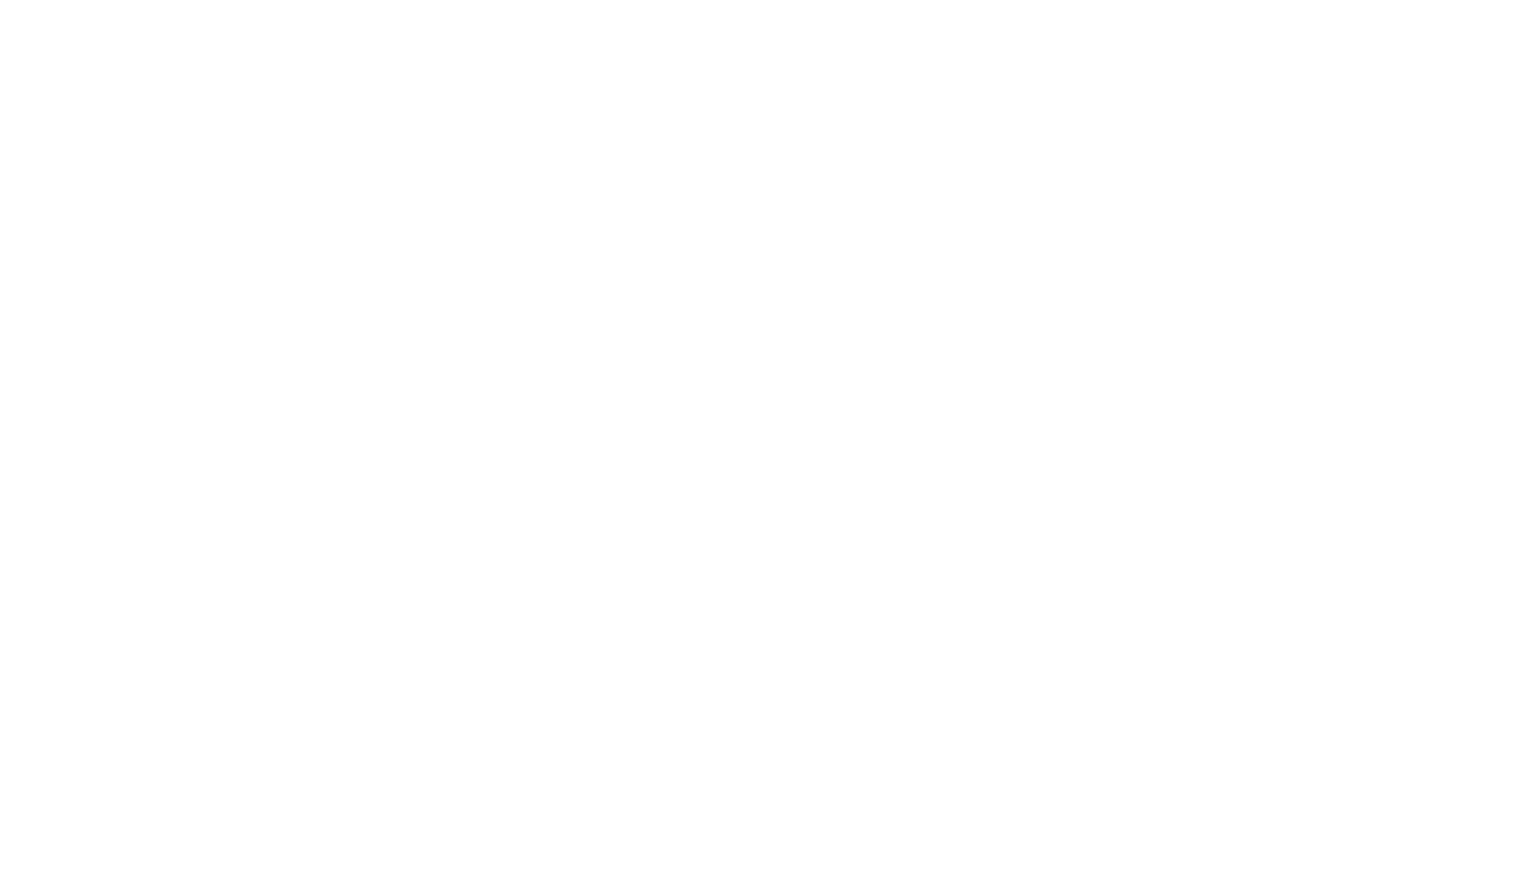 Hempacco logo large for dark backgrounds (transparent PNG)